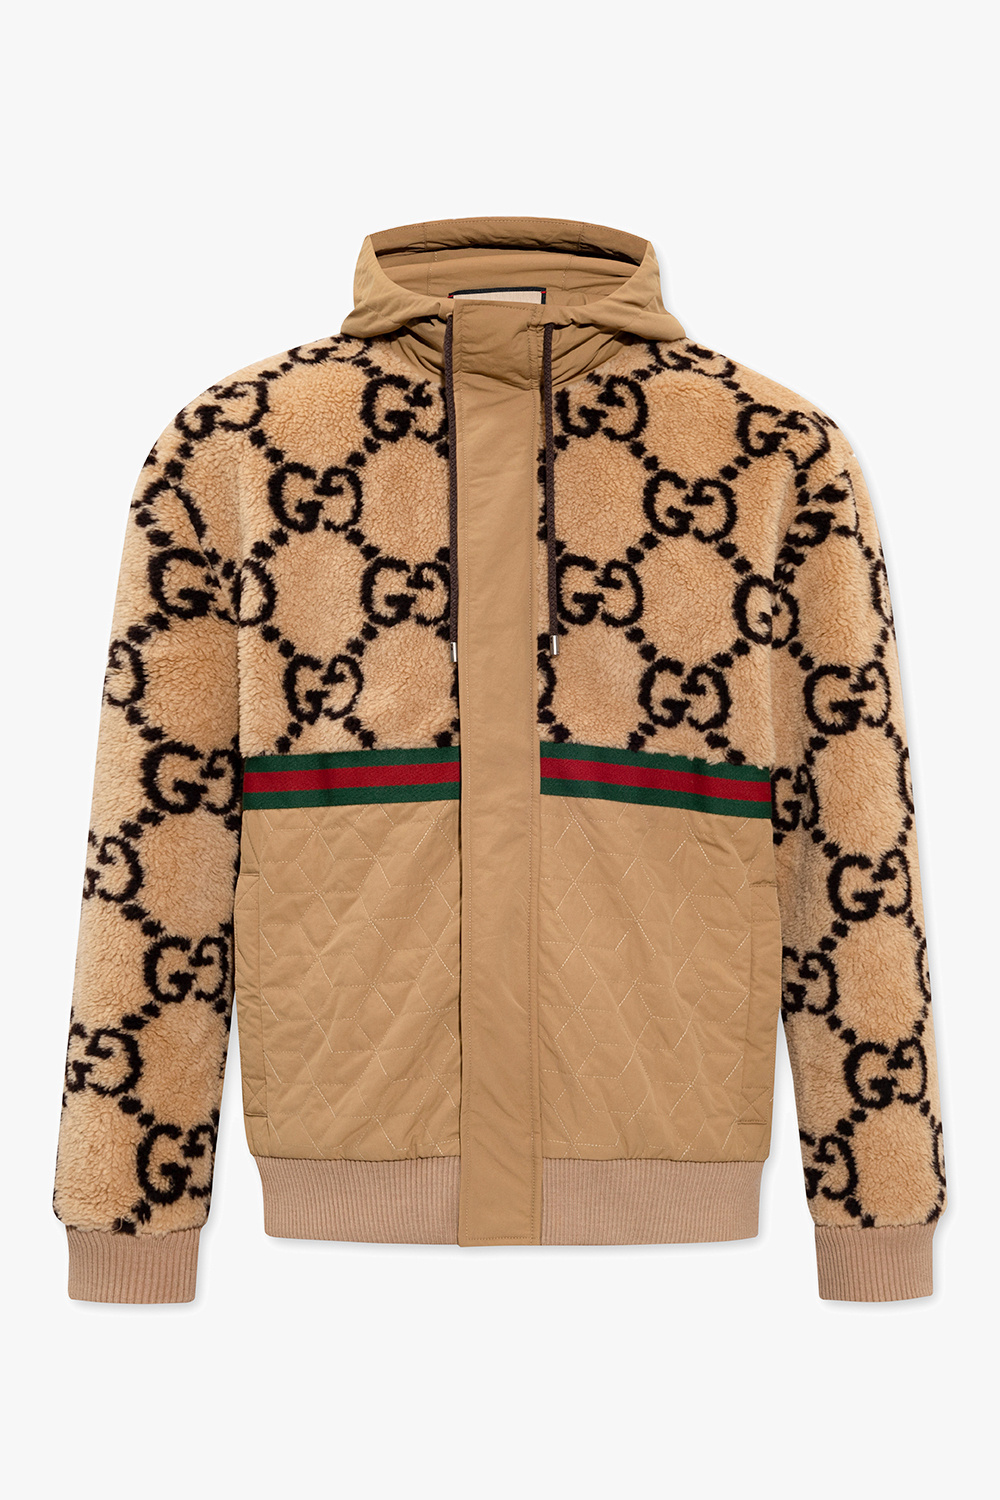 Gucci GG Jacquard Tape Sleeve Down Jacket Black for Men